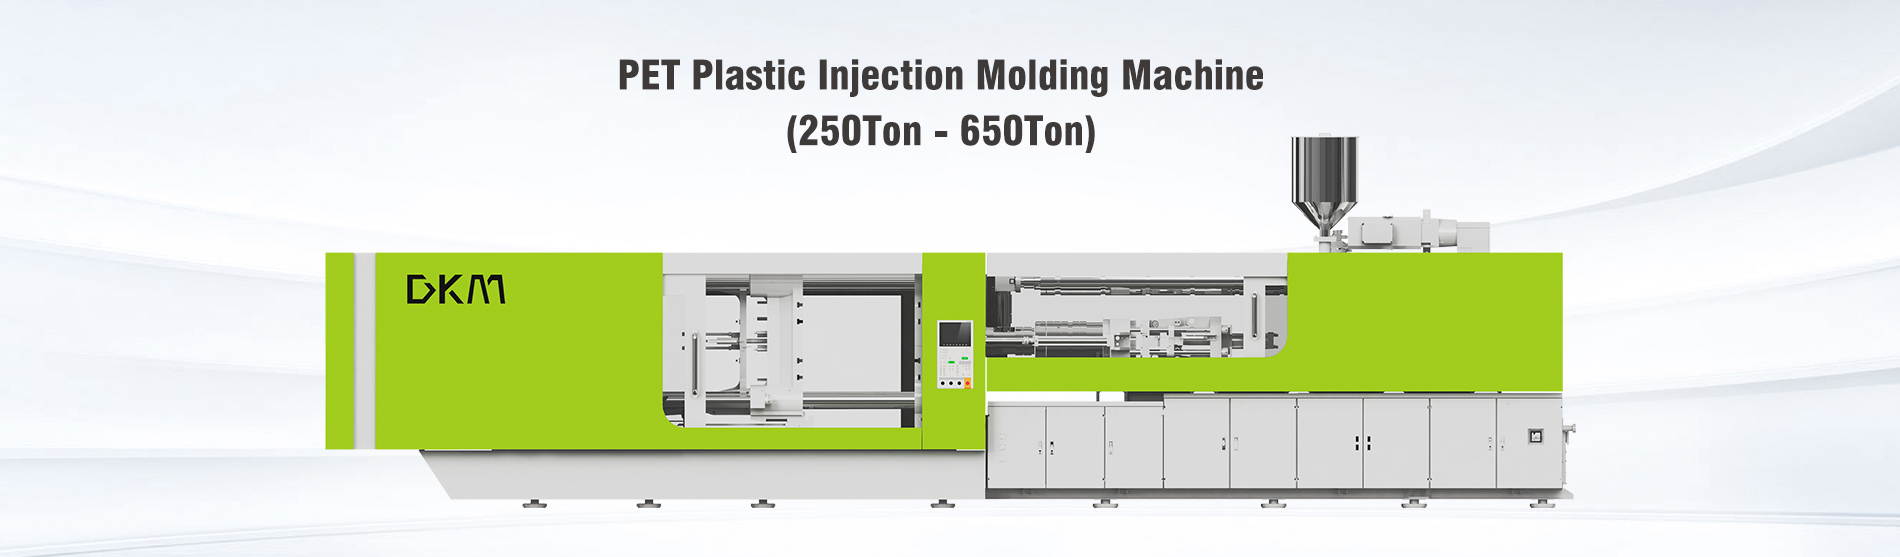 PET Plastic Injection Molding Machine